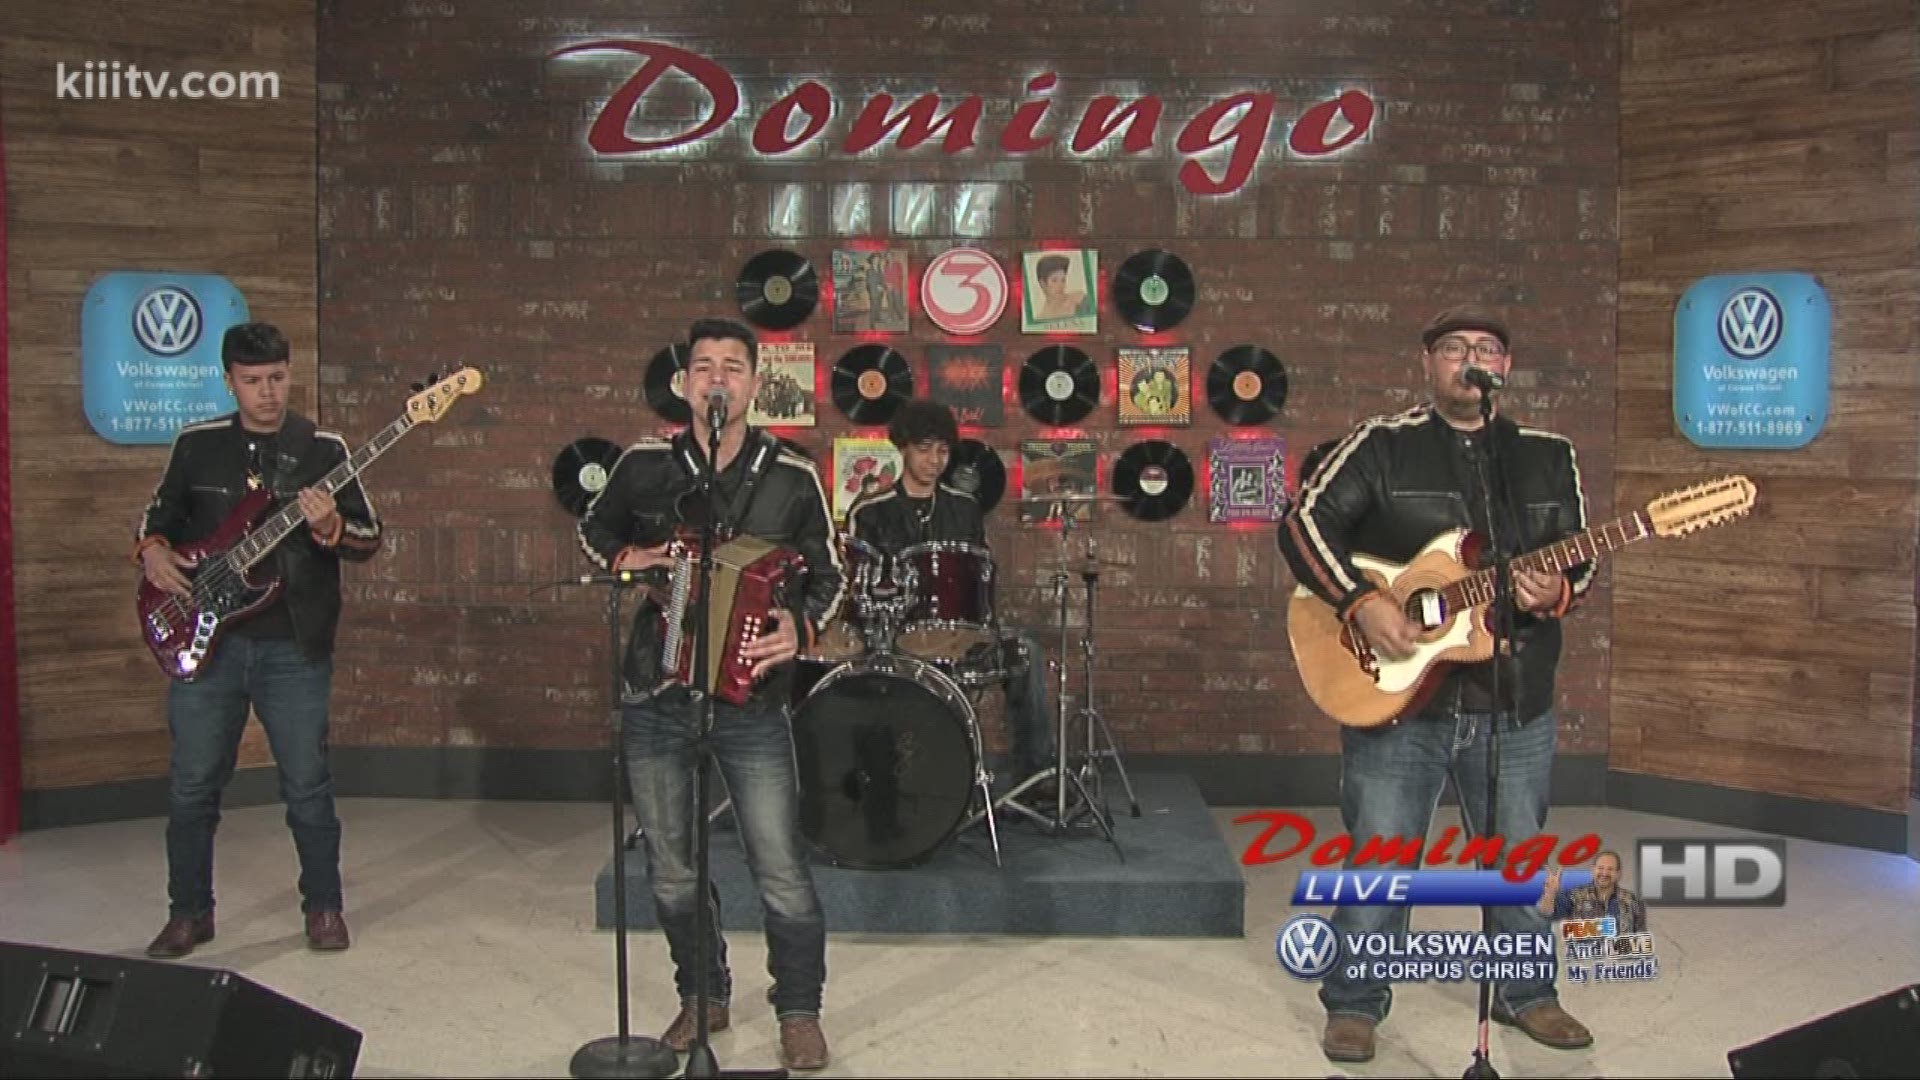 Conjunto Cats performing "Te Equivocaste" on Domingo Live.